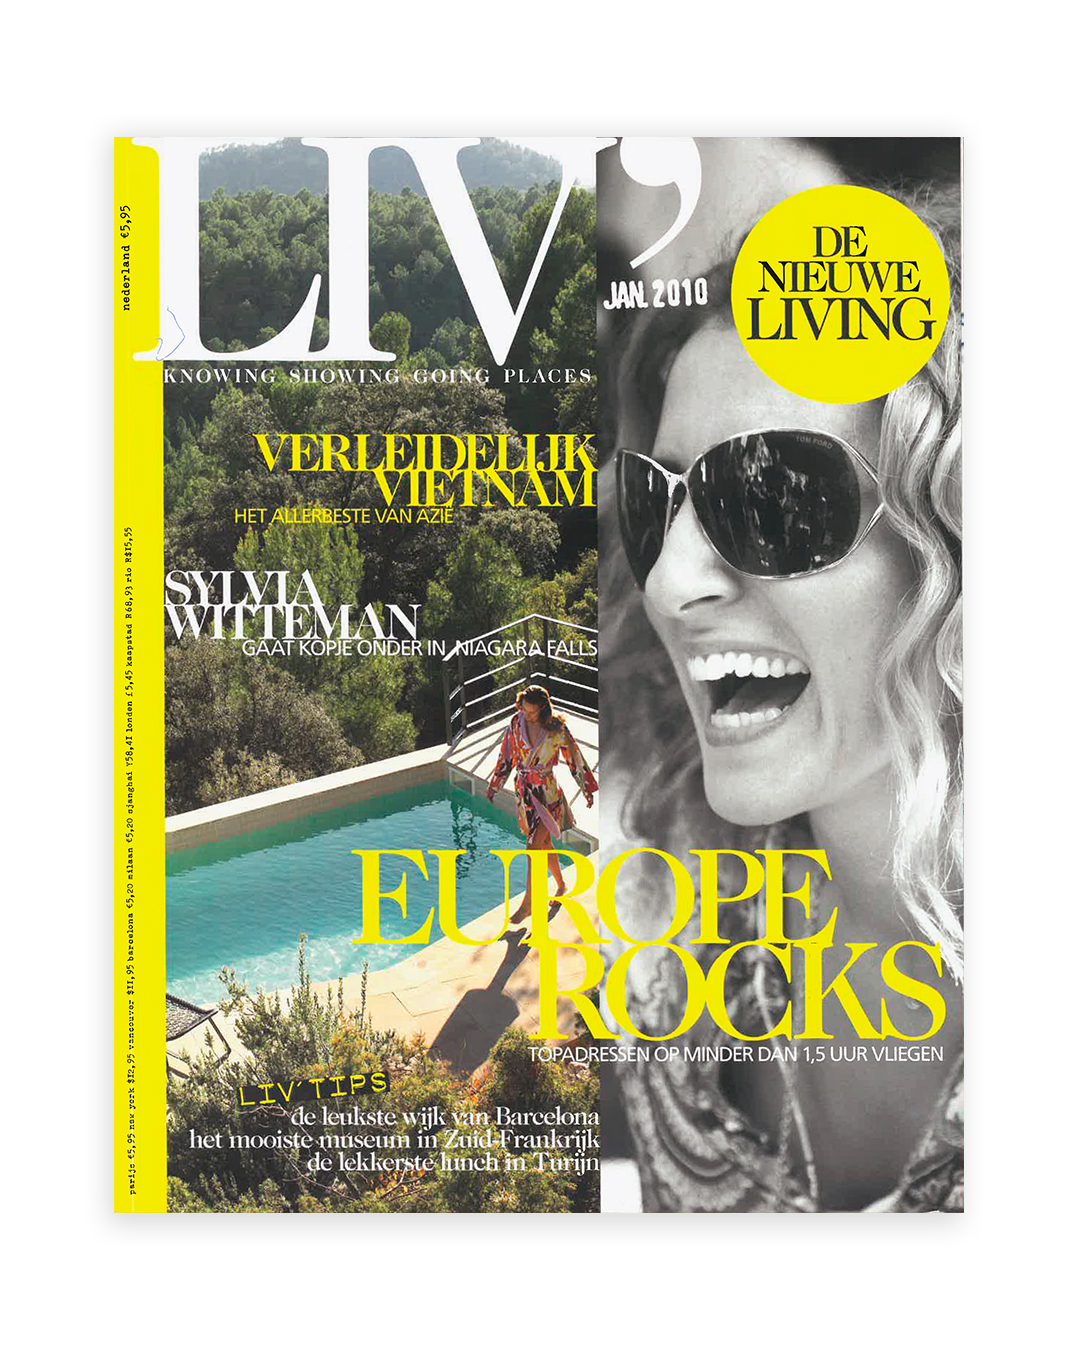 LIV' Europe Rocks